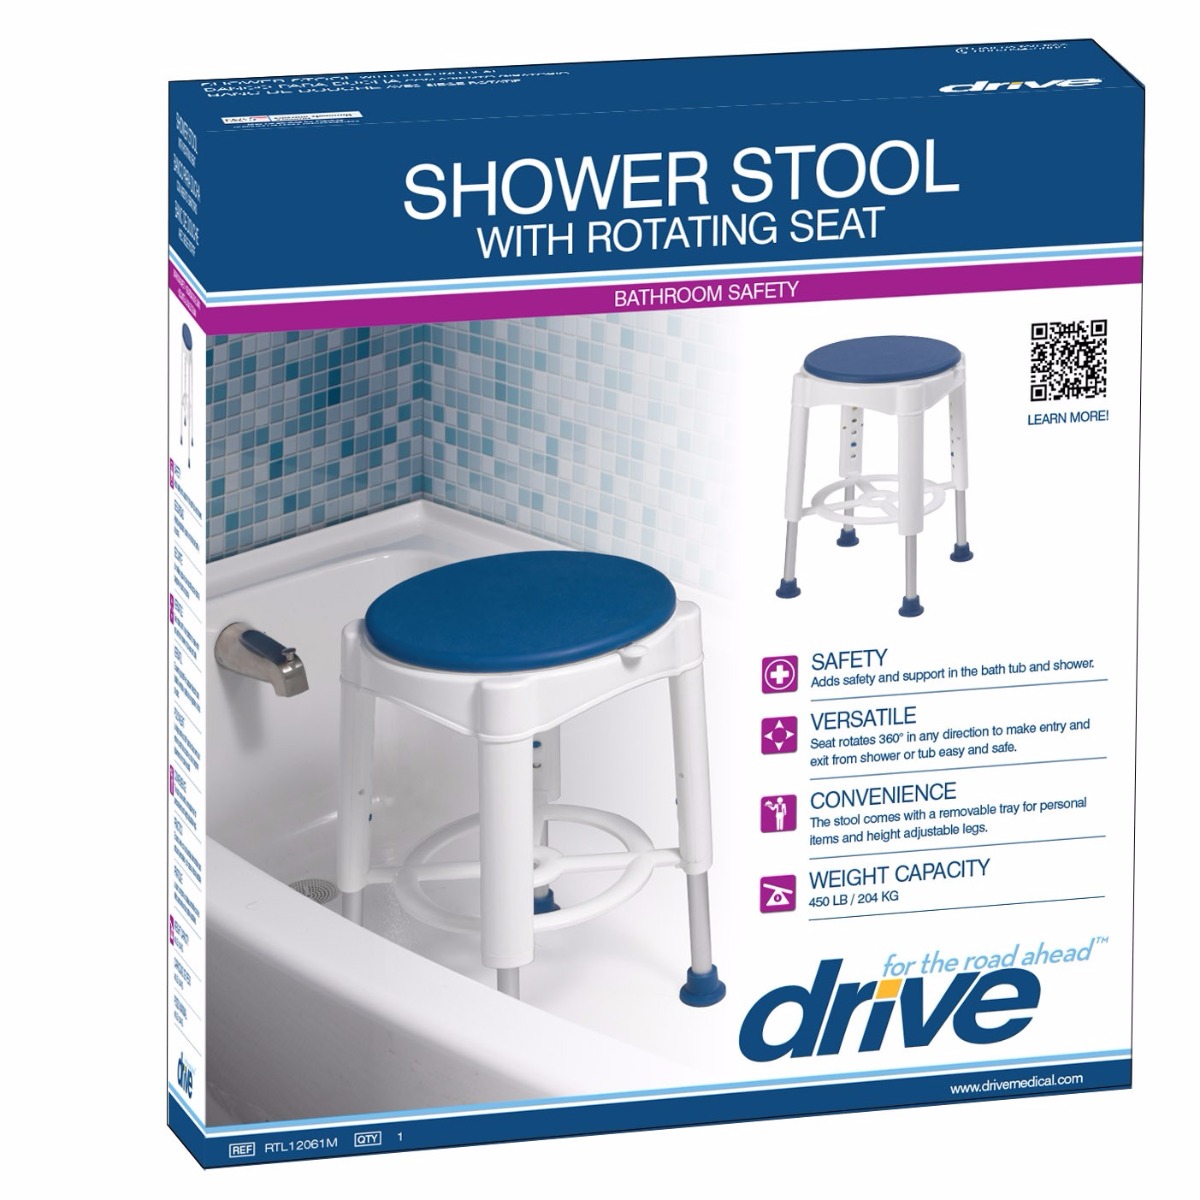 Swivel Shower Chair with Shelf